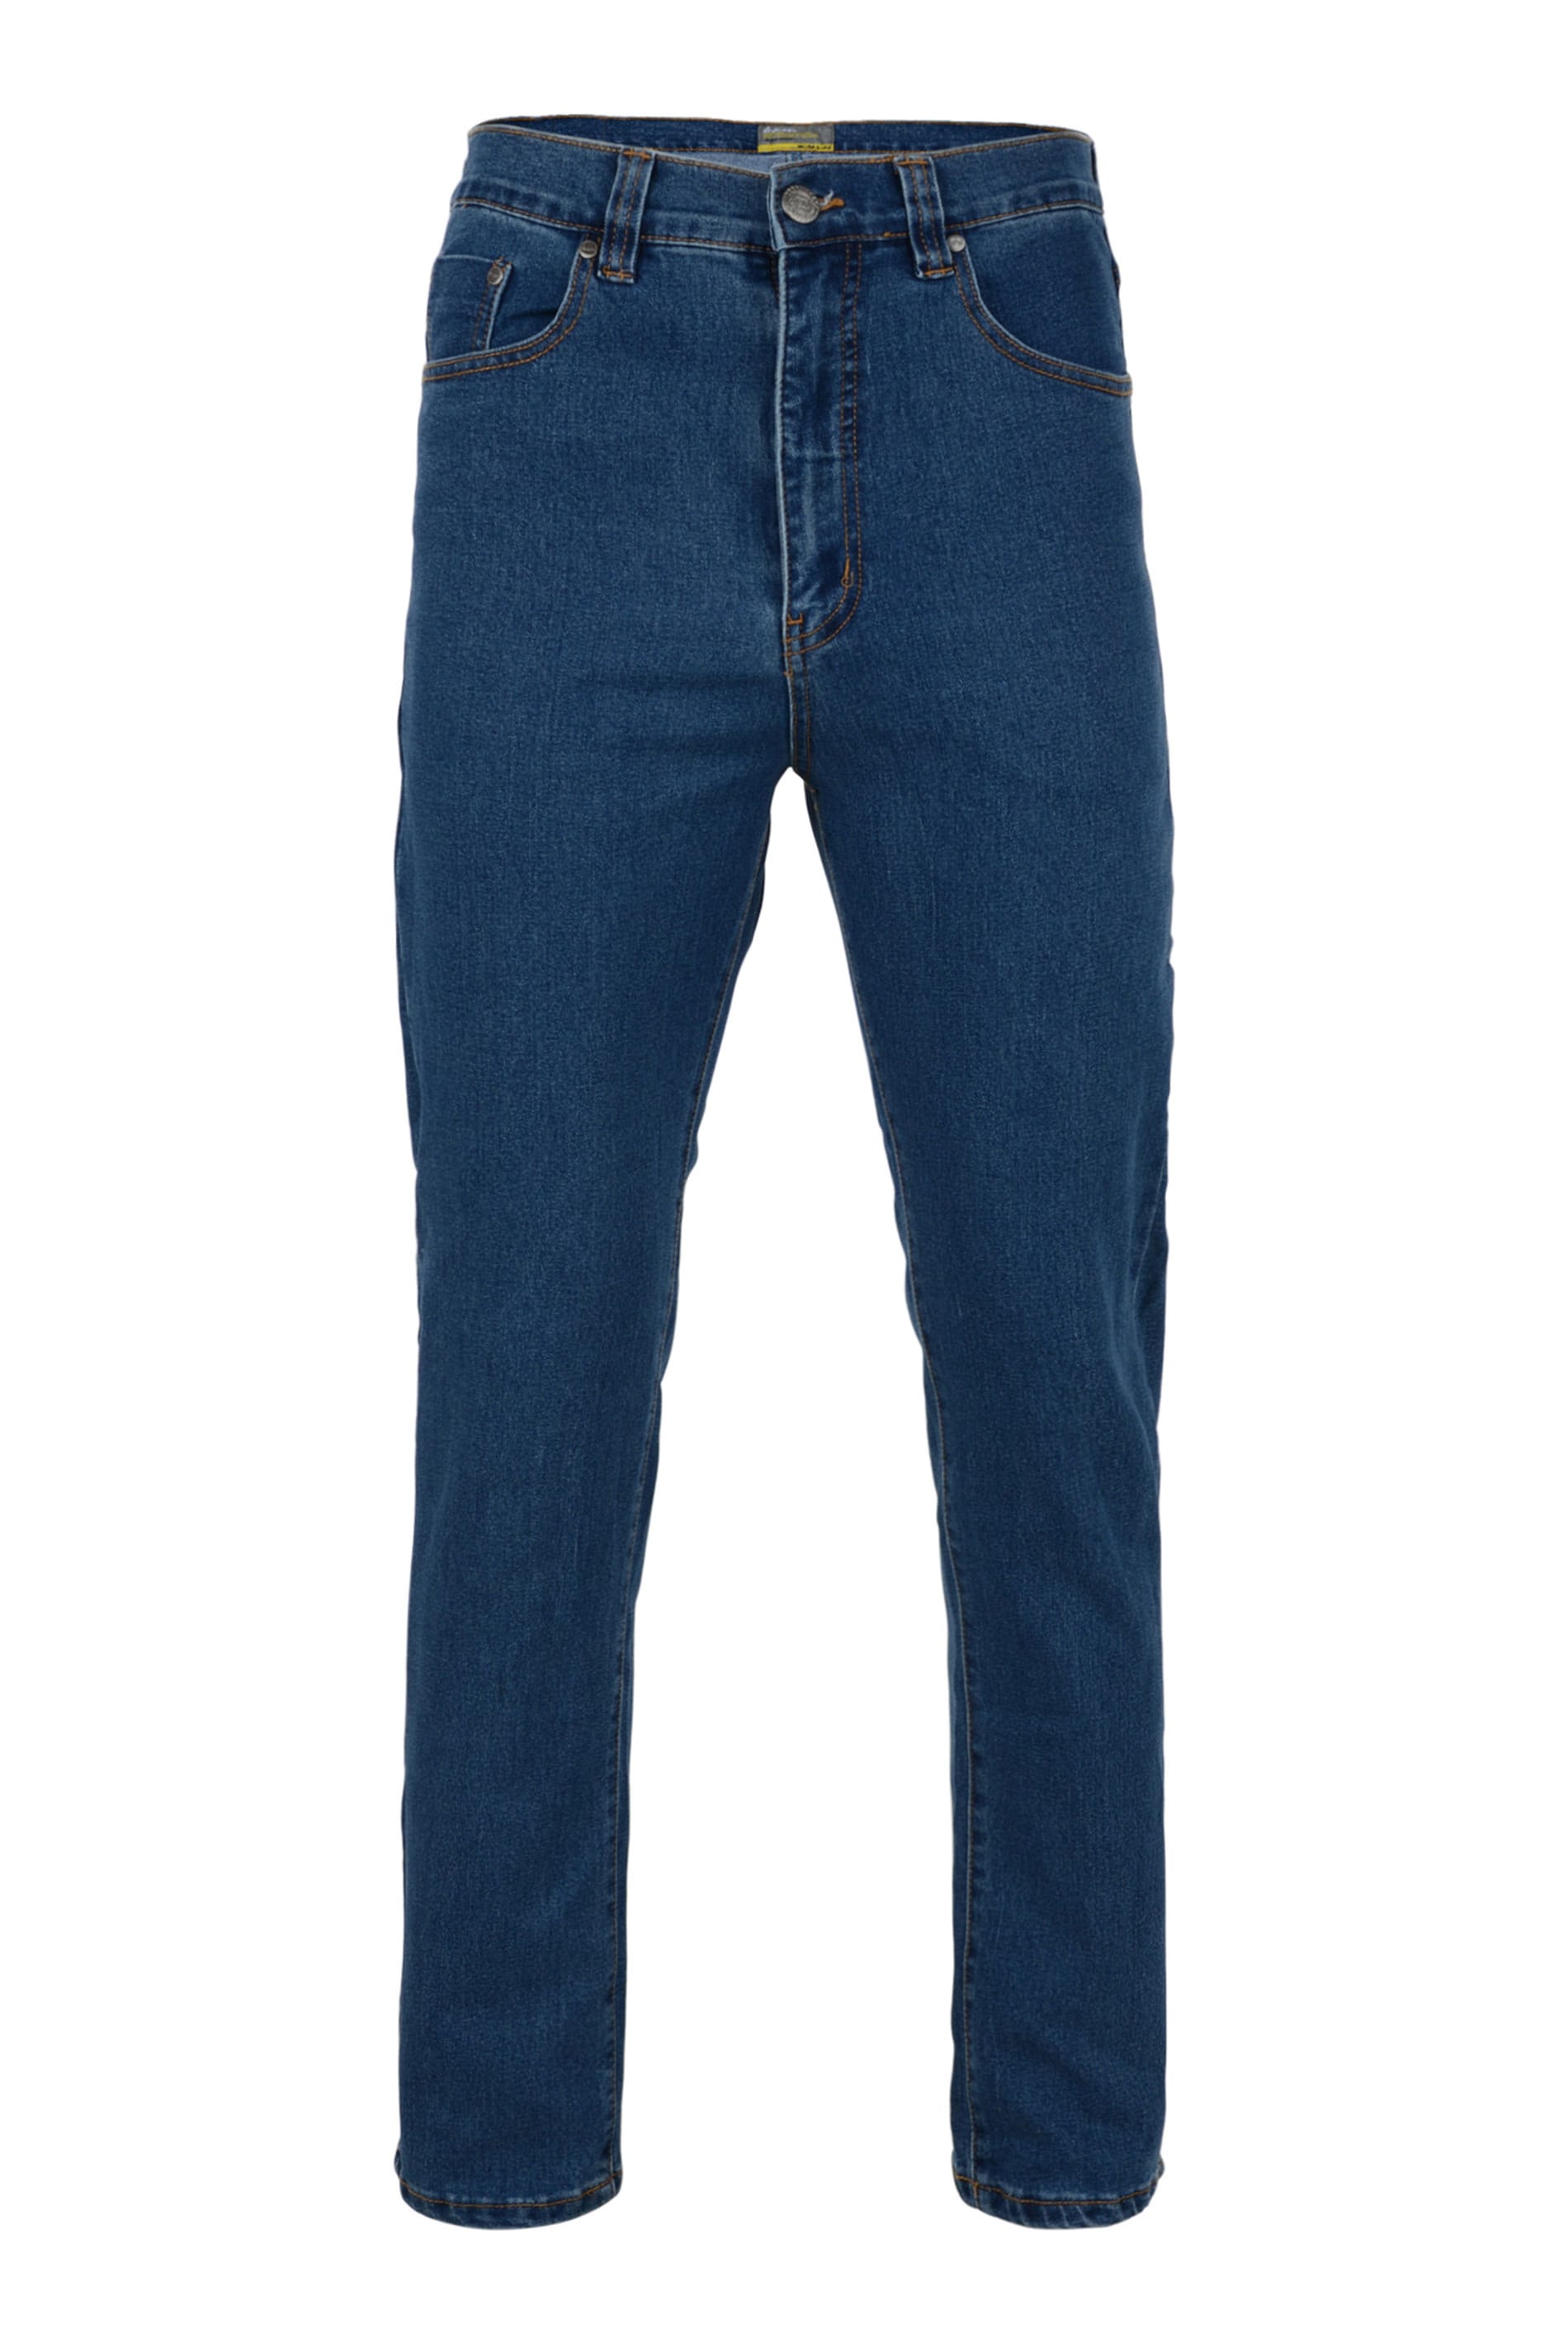 KAM Blue Regular Fit Stretch Jeans | BadRhino 3